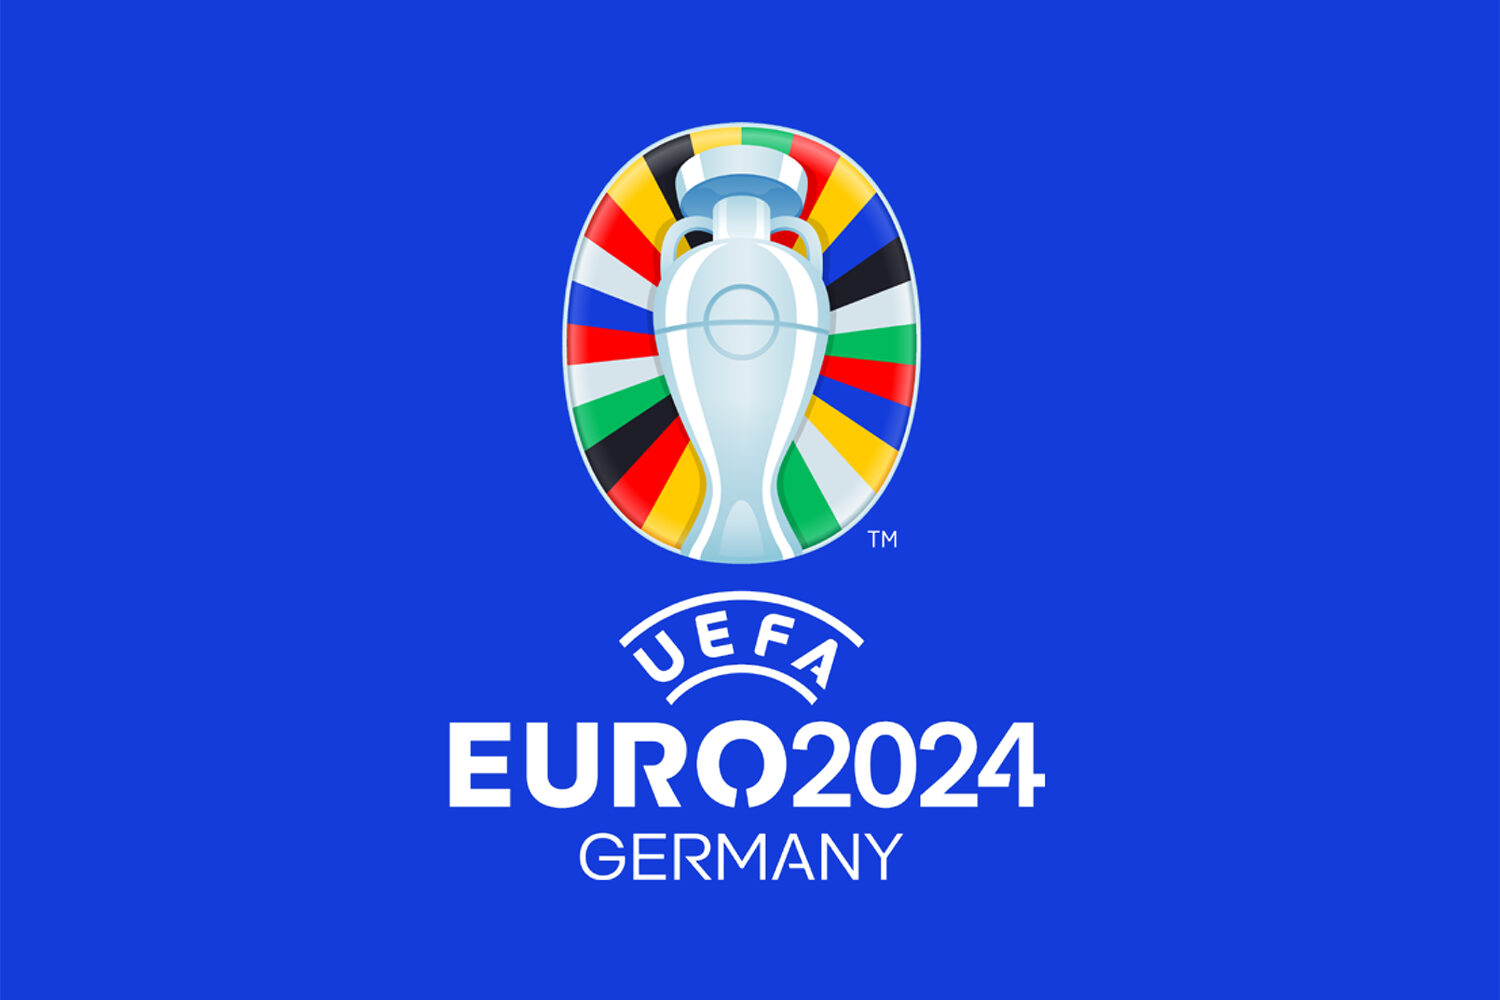 logo-euro-2024-germany-njemacka-1500x1000.jpg